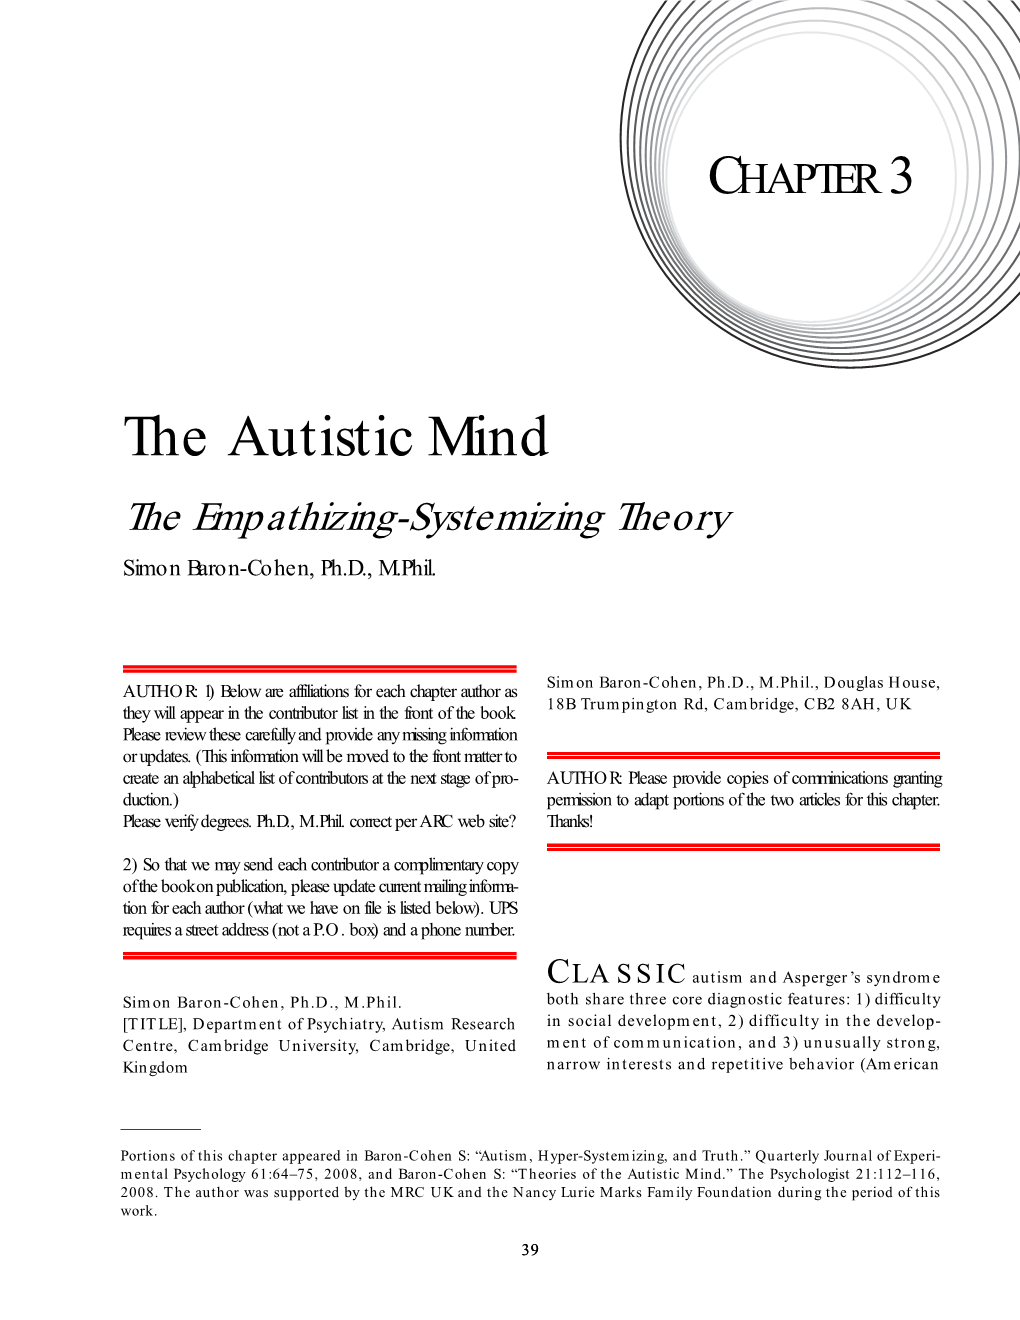 The Autistic Mind the Empathizing-Systemizing Theory Simon Baron-Cohen, Ph.D., M.Phil